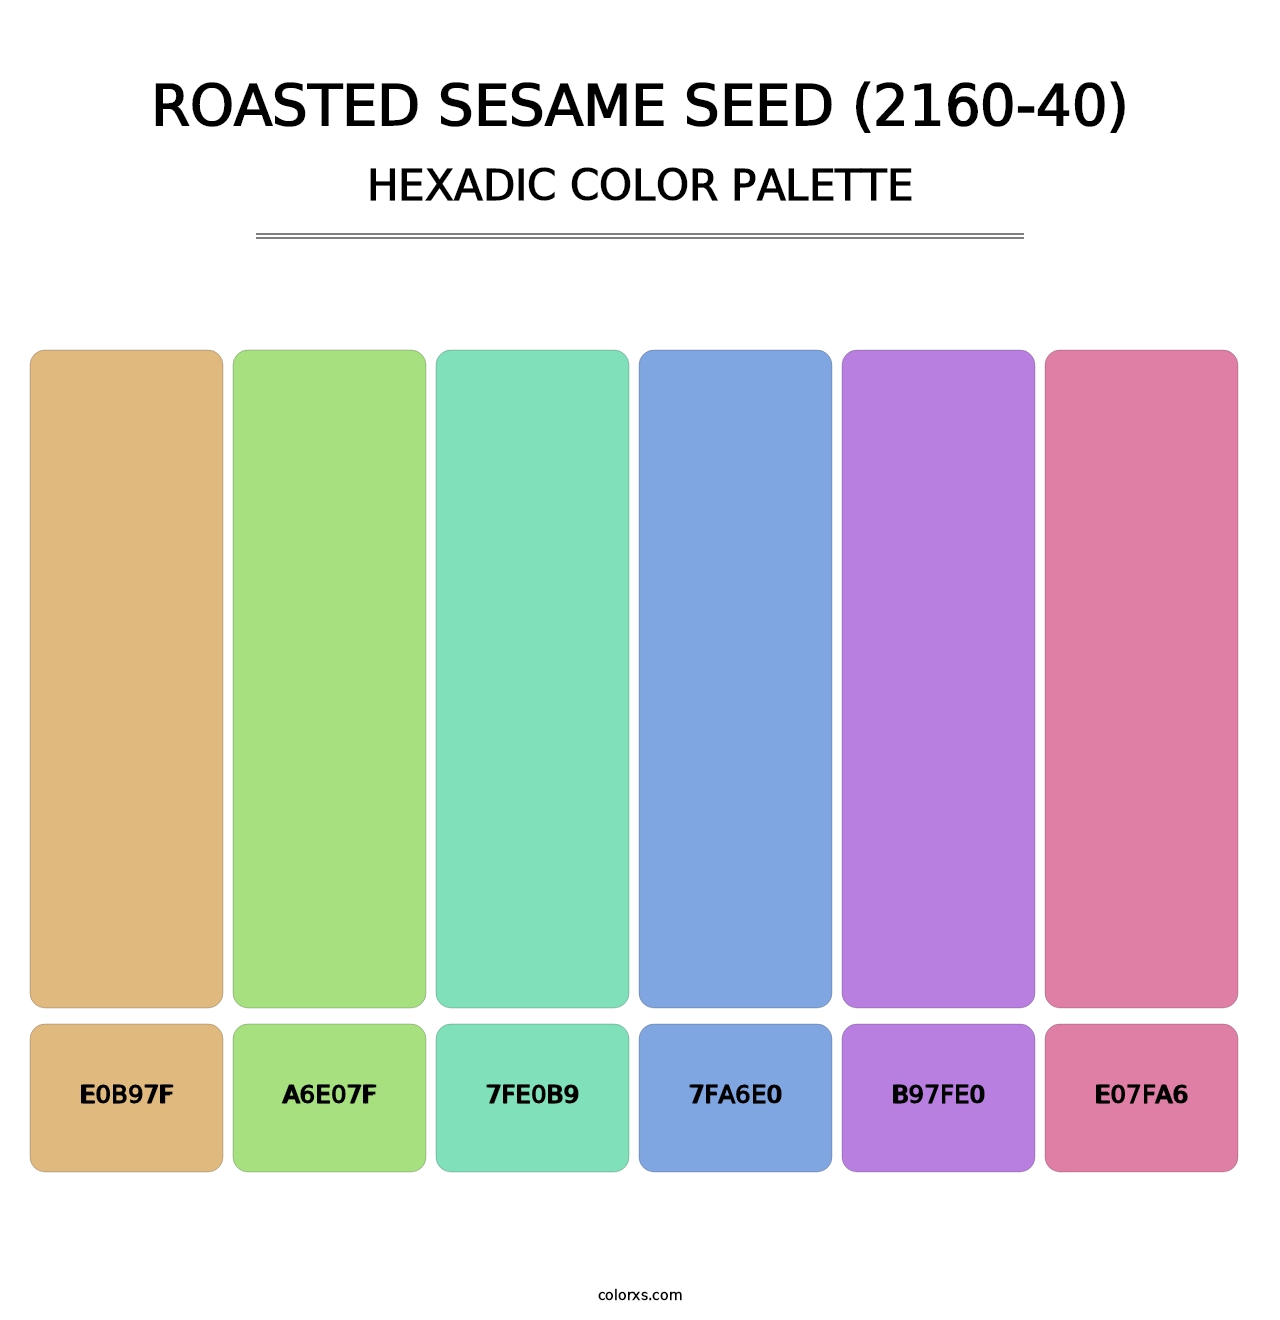 Roasted Sesame Seed (2160-40) - Hexadic Color Palette